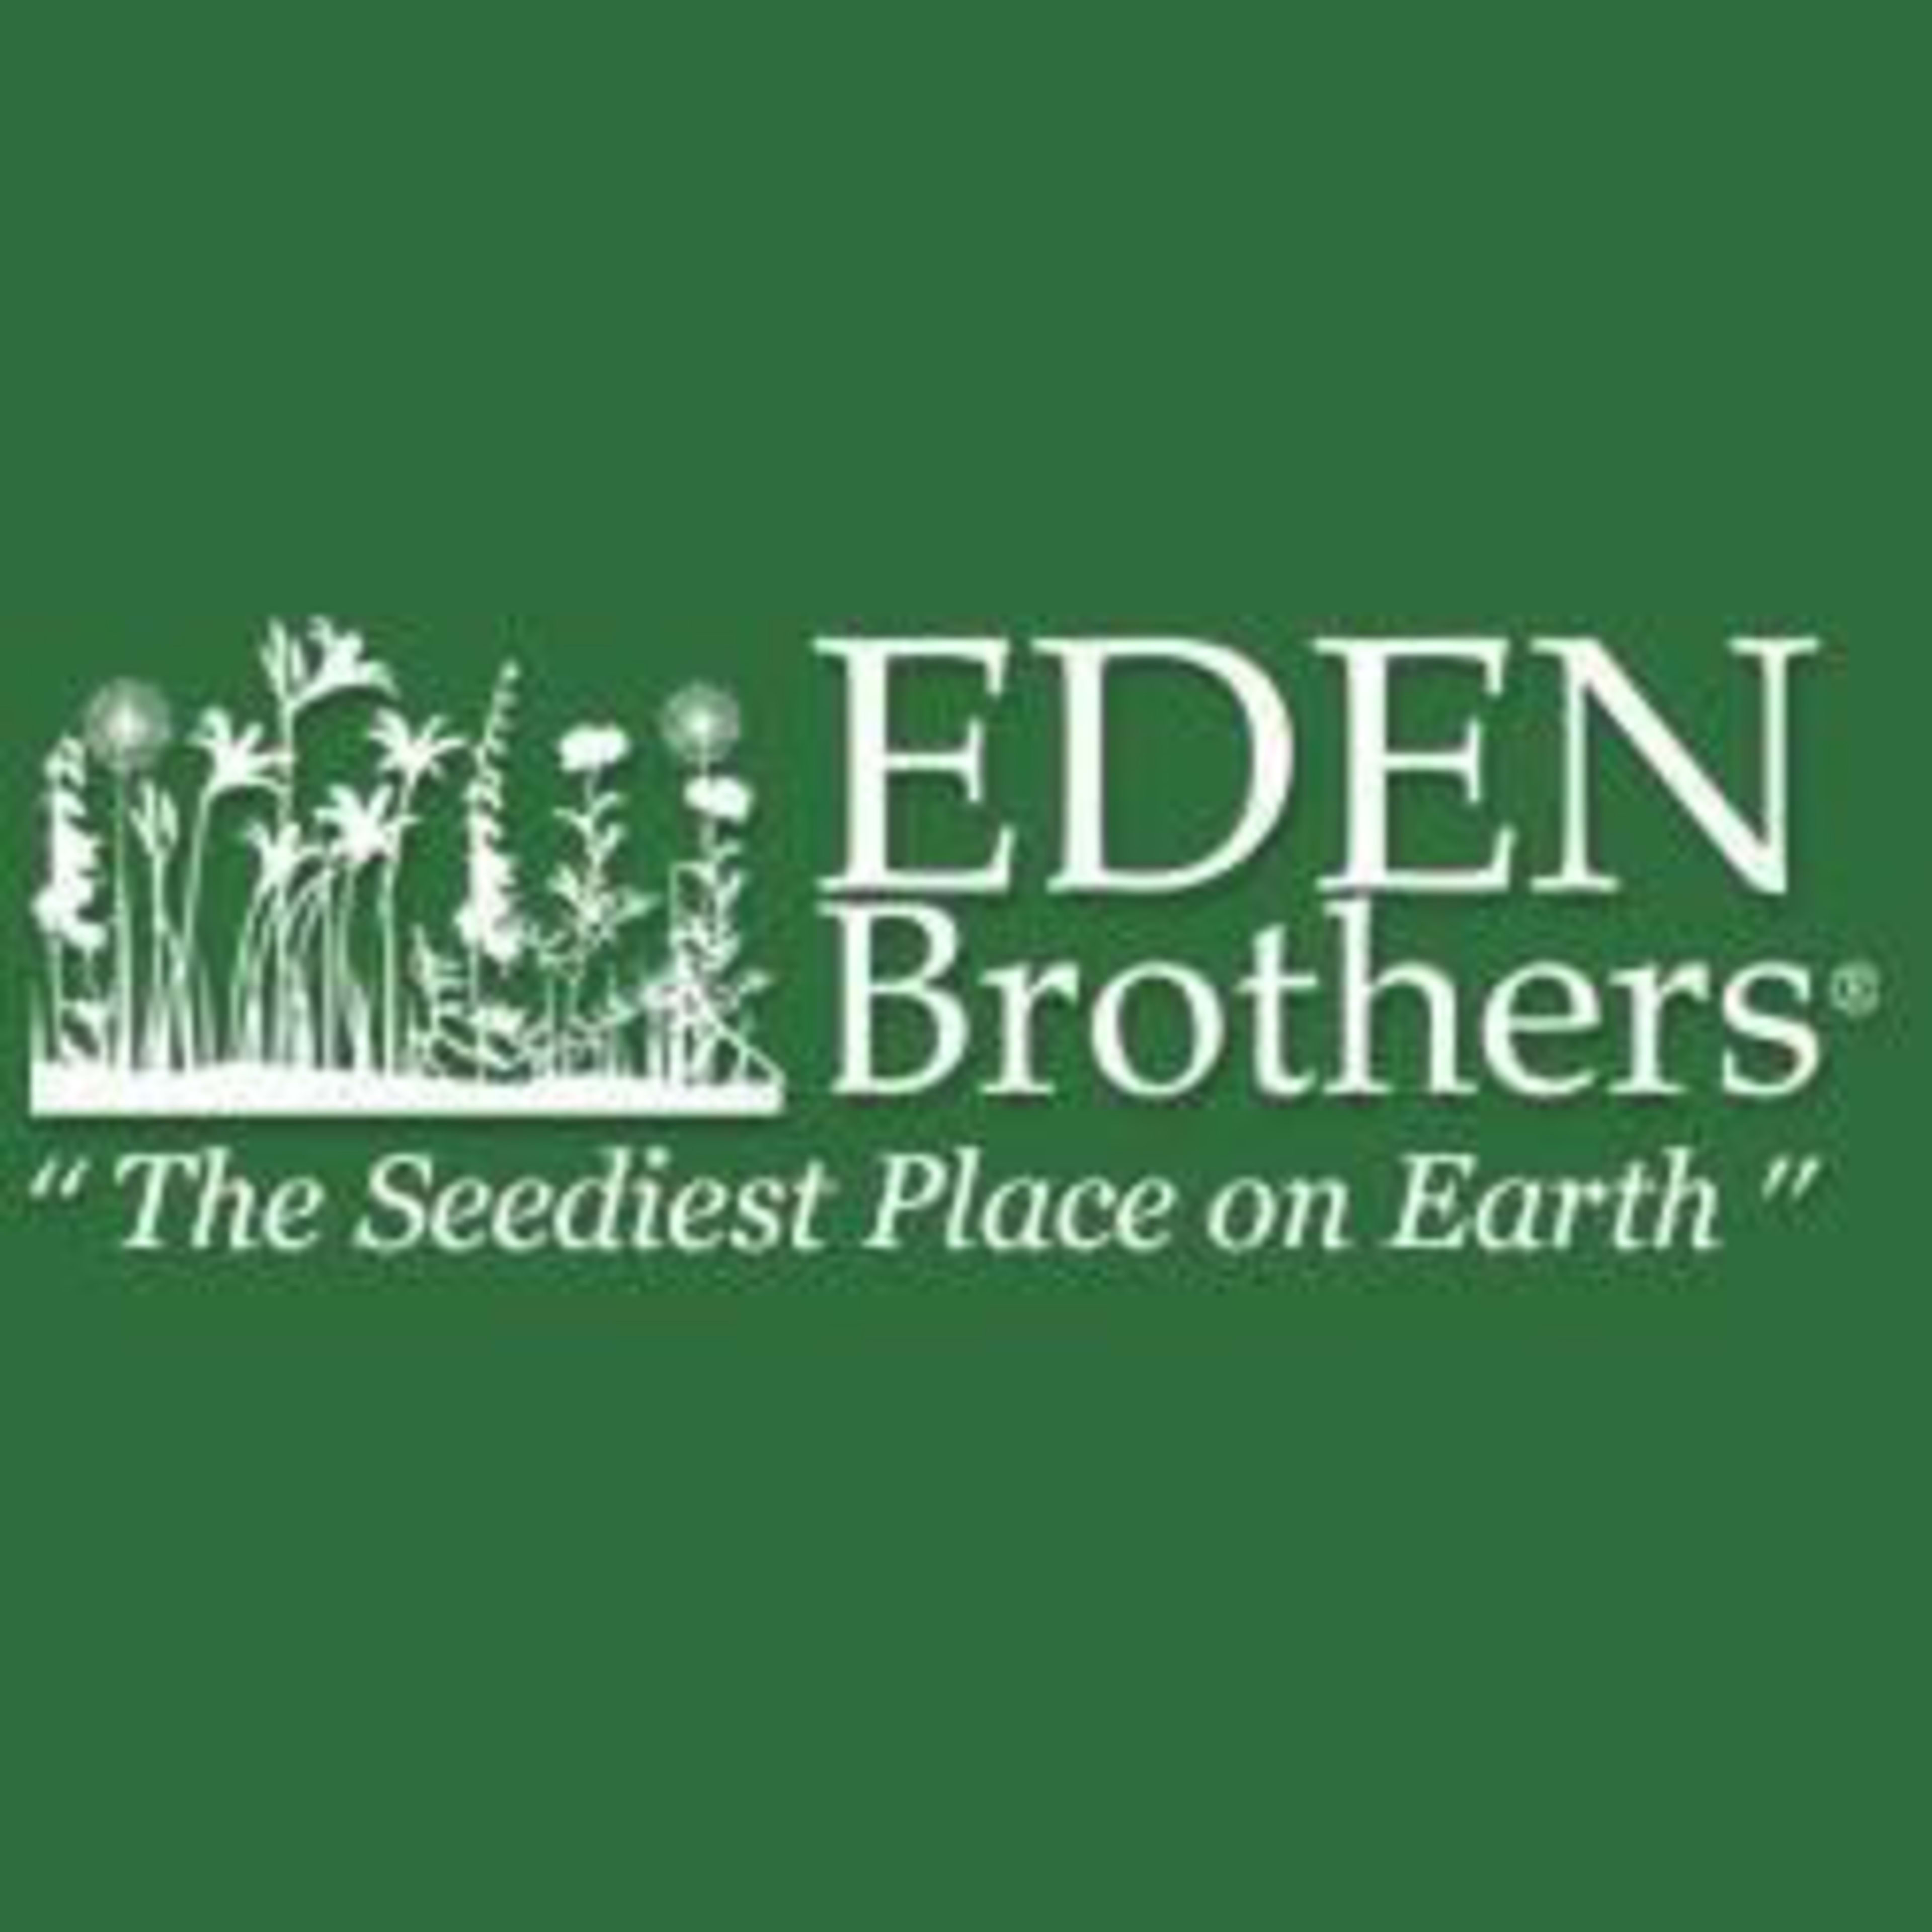 EDEN Brothers Seeds Shop Code